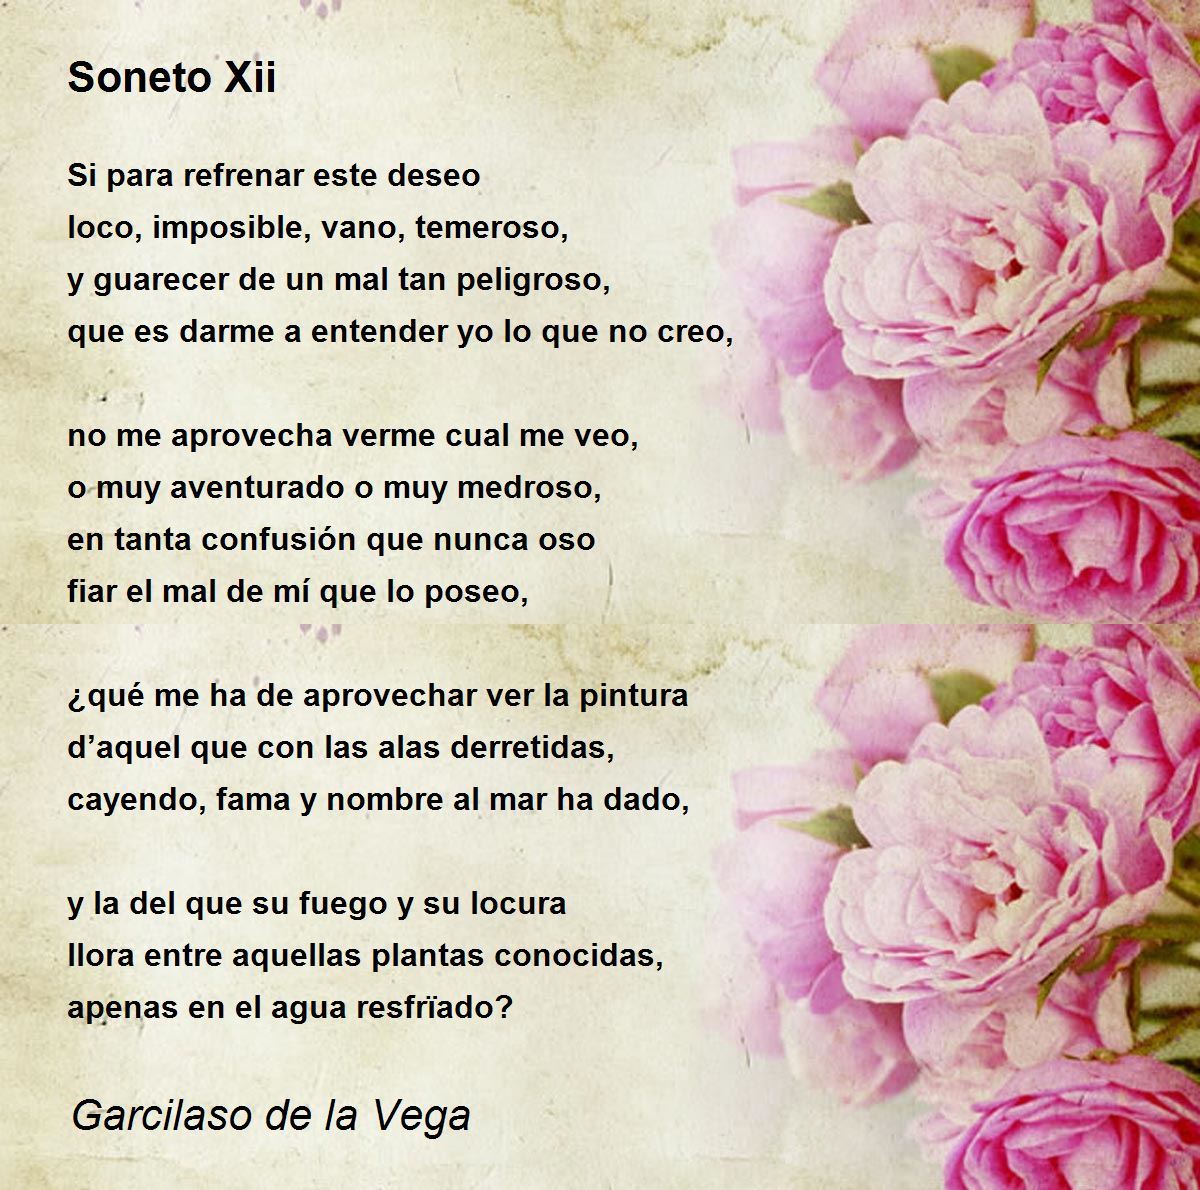 Soneto Xii - Soneto Xii Poem by Garcilaso de la Vega